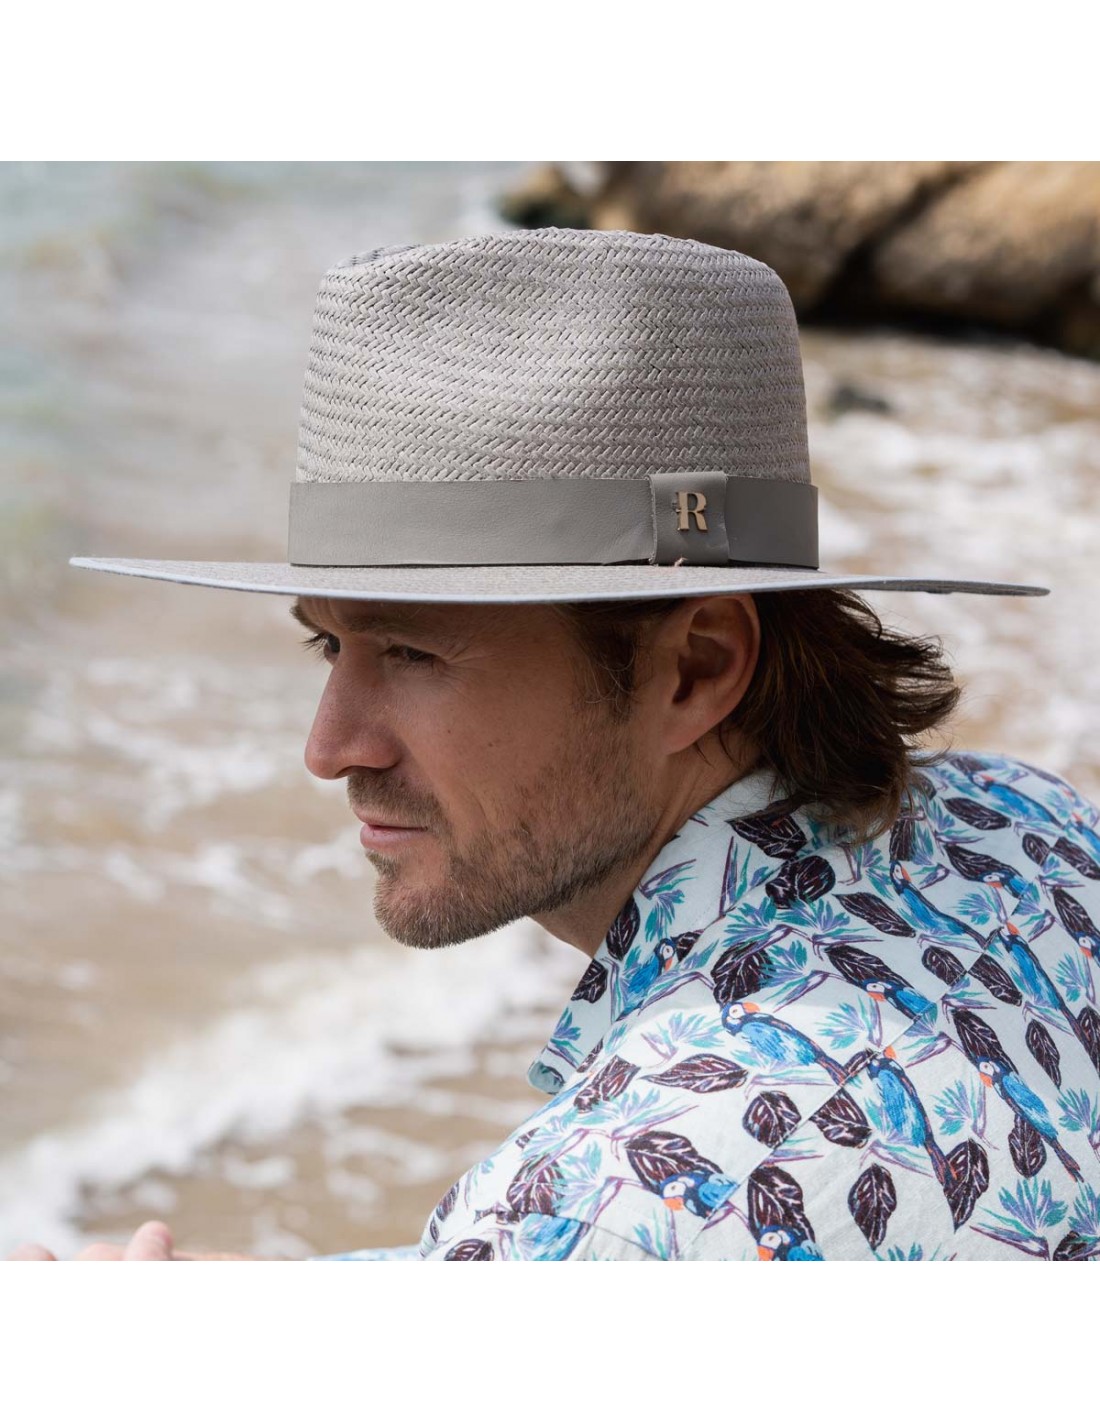 Shop Straw Hat Florida Grey - Fedora Style for Men - Raceu Hats Online